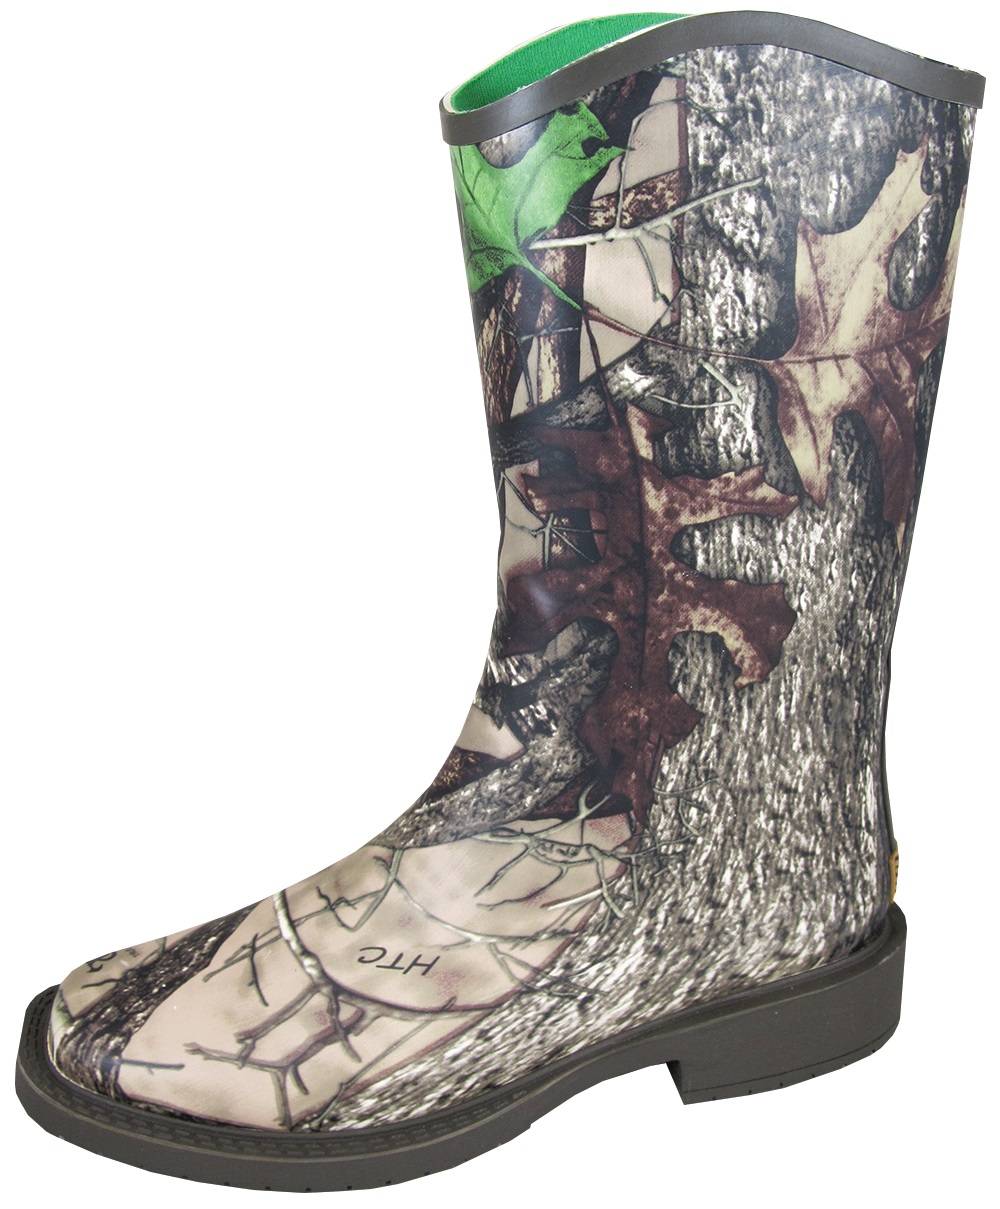 Smoky Mountain Oconee Boots - Ladies - Camo Green